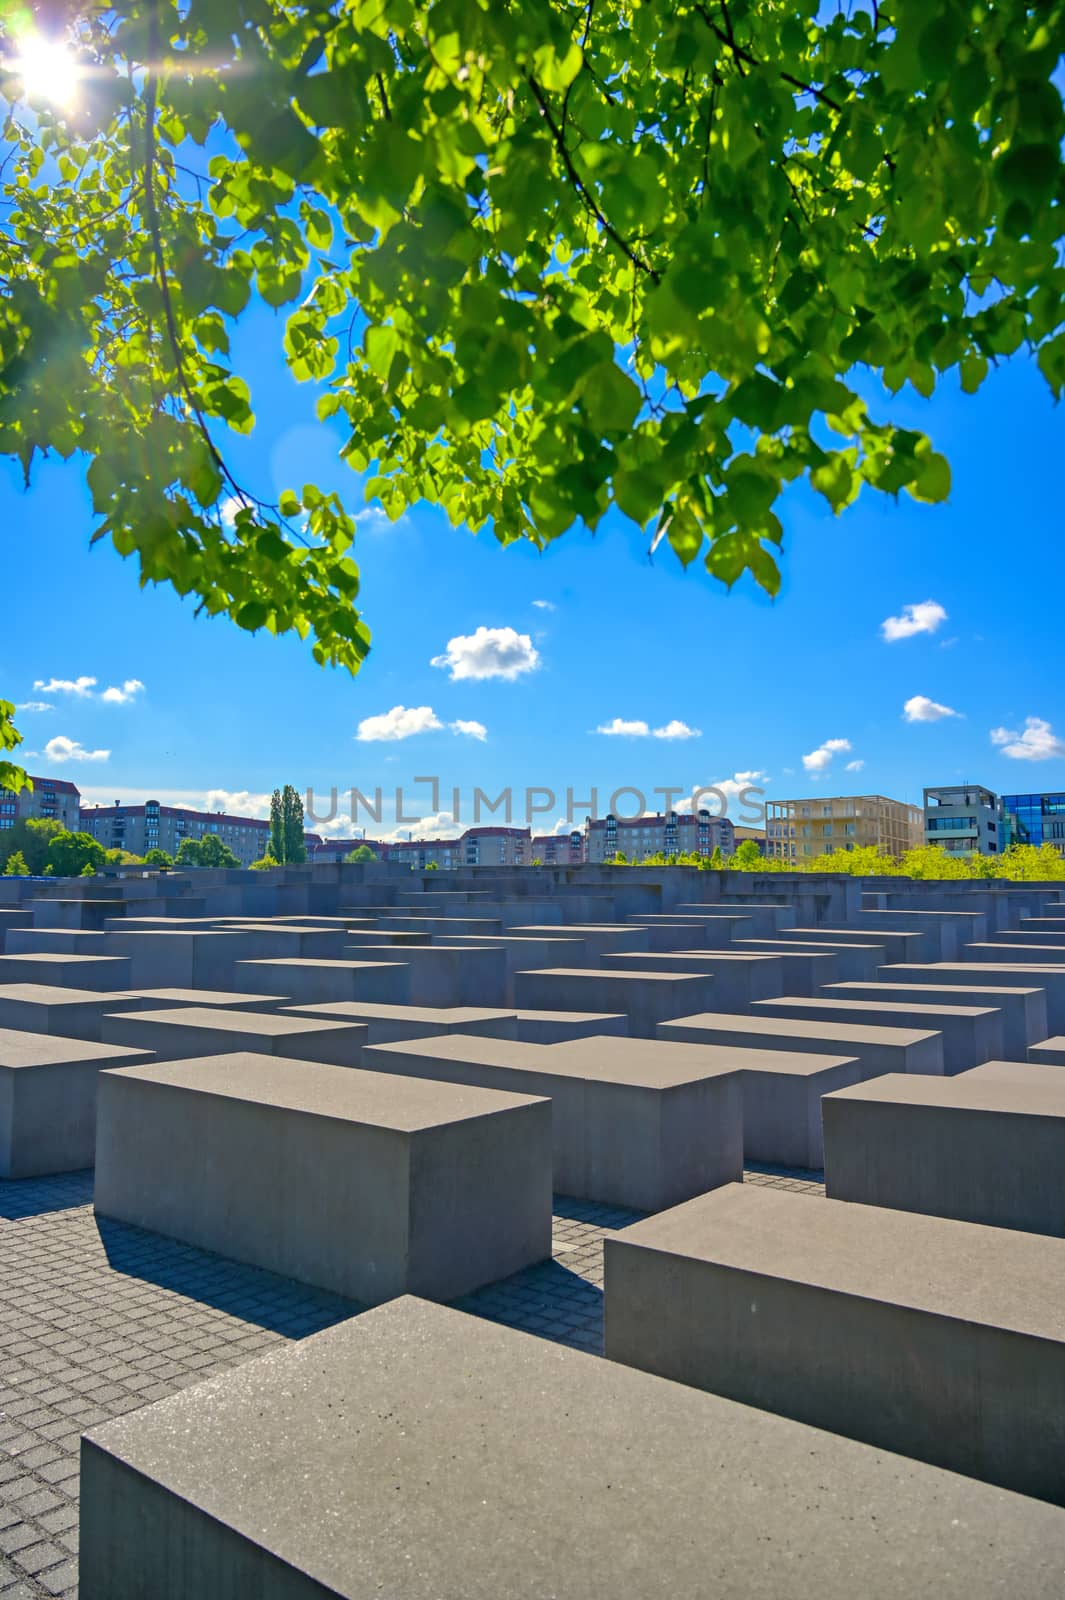 Memorial to the Murdered Jews of Europe in Berlin, Germany by jbyard22